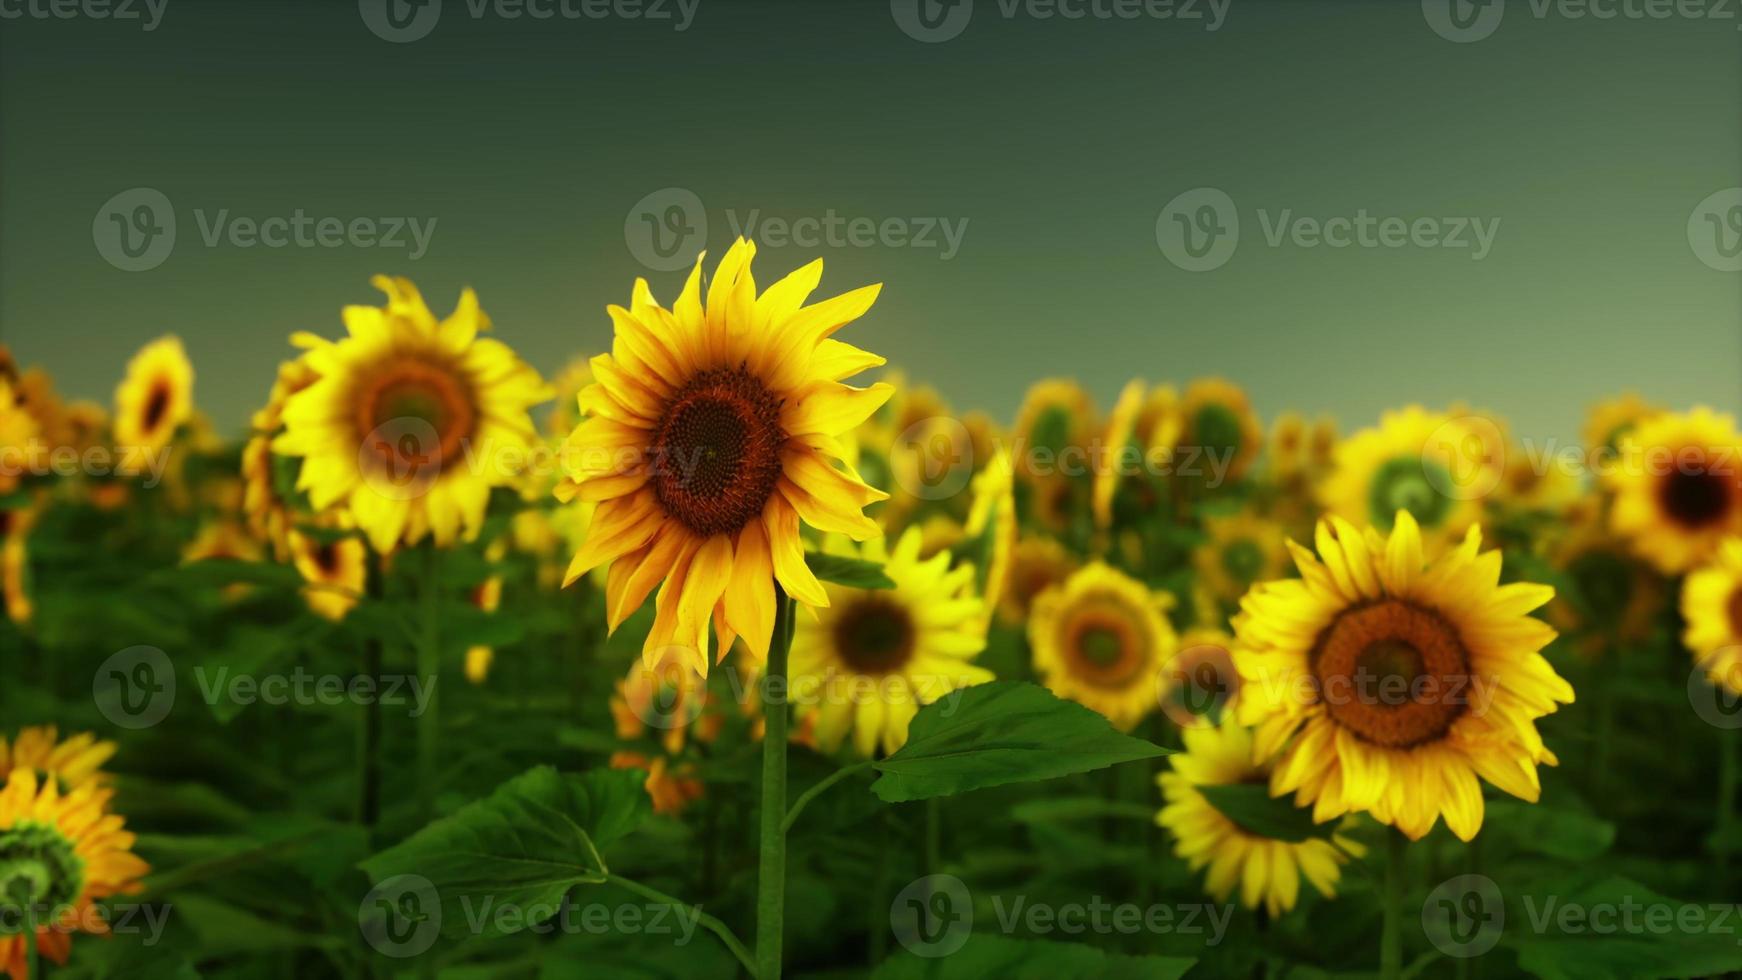 Splendid scene of vivid yellow sunflowers in the evening photo